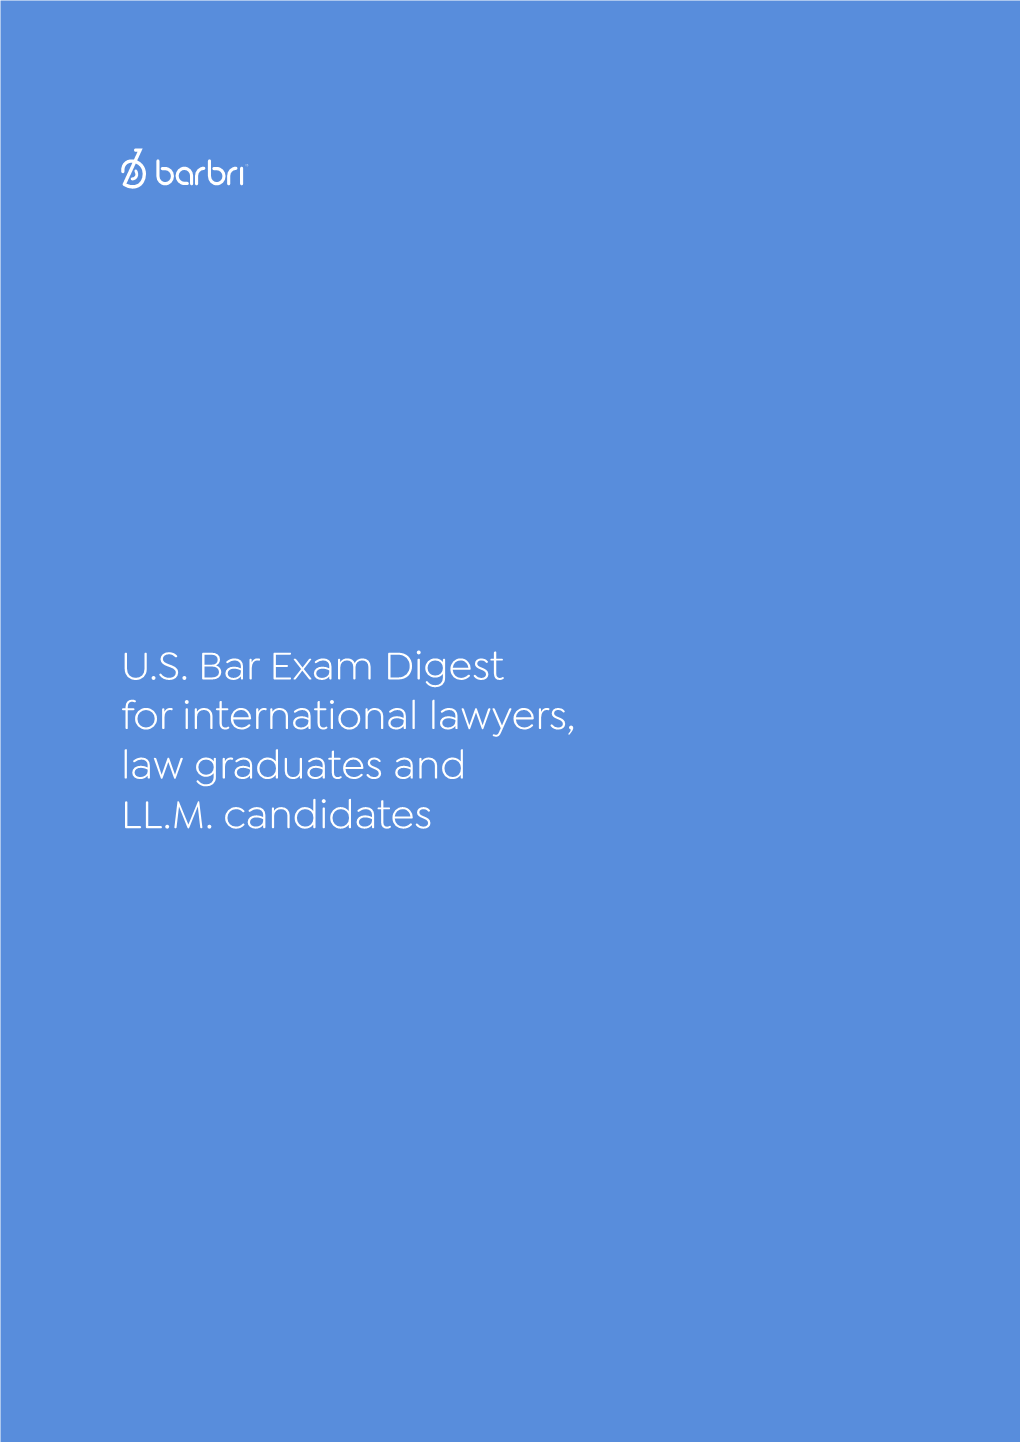 U.S. Bar Exam Digest for International Lawyers, Law Graduates and LL.M